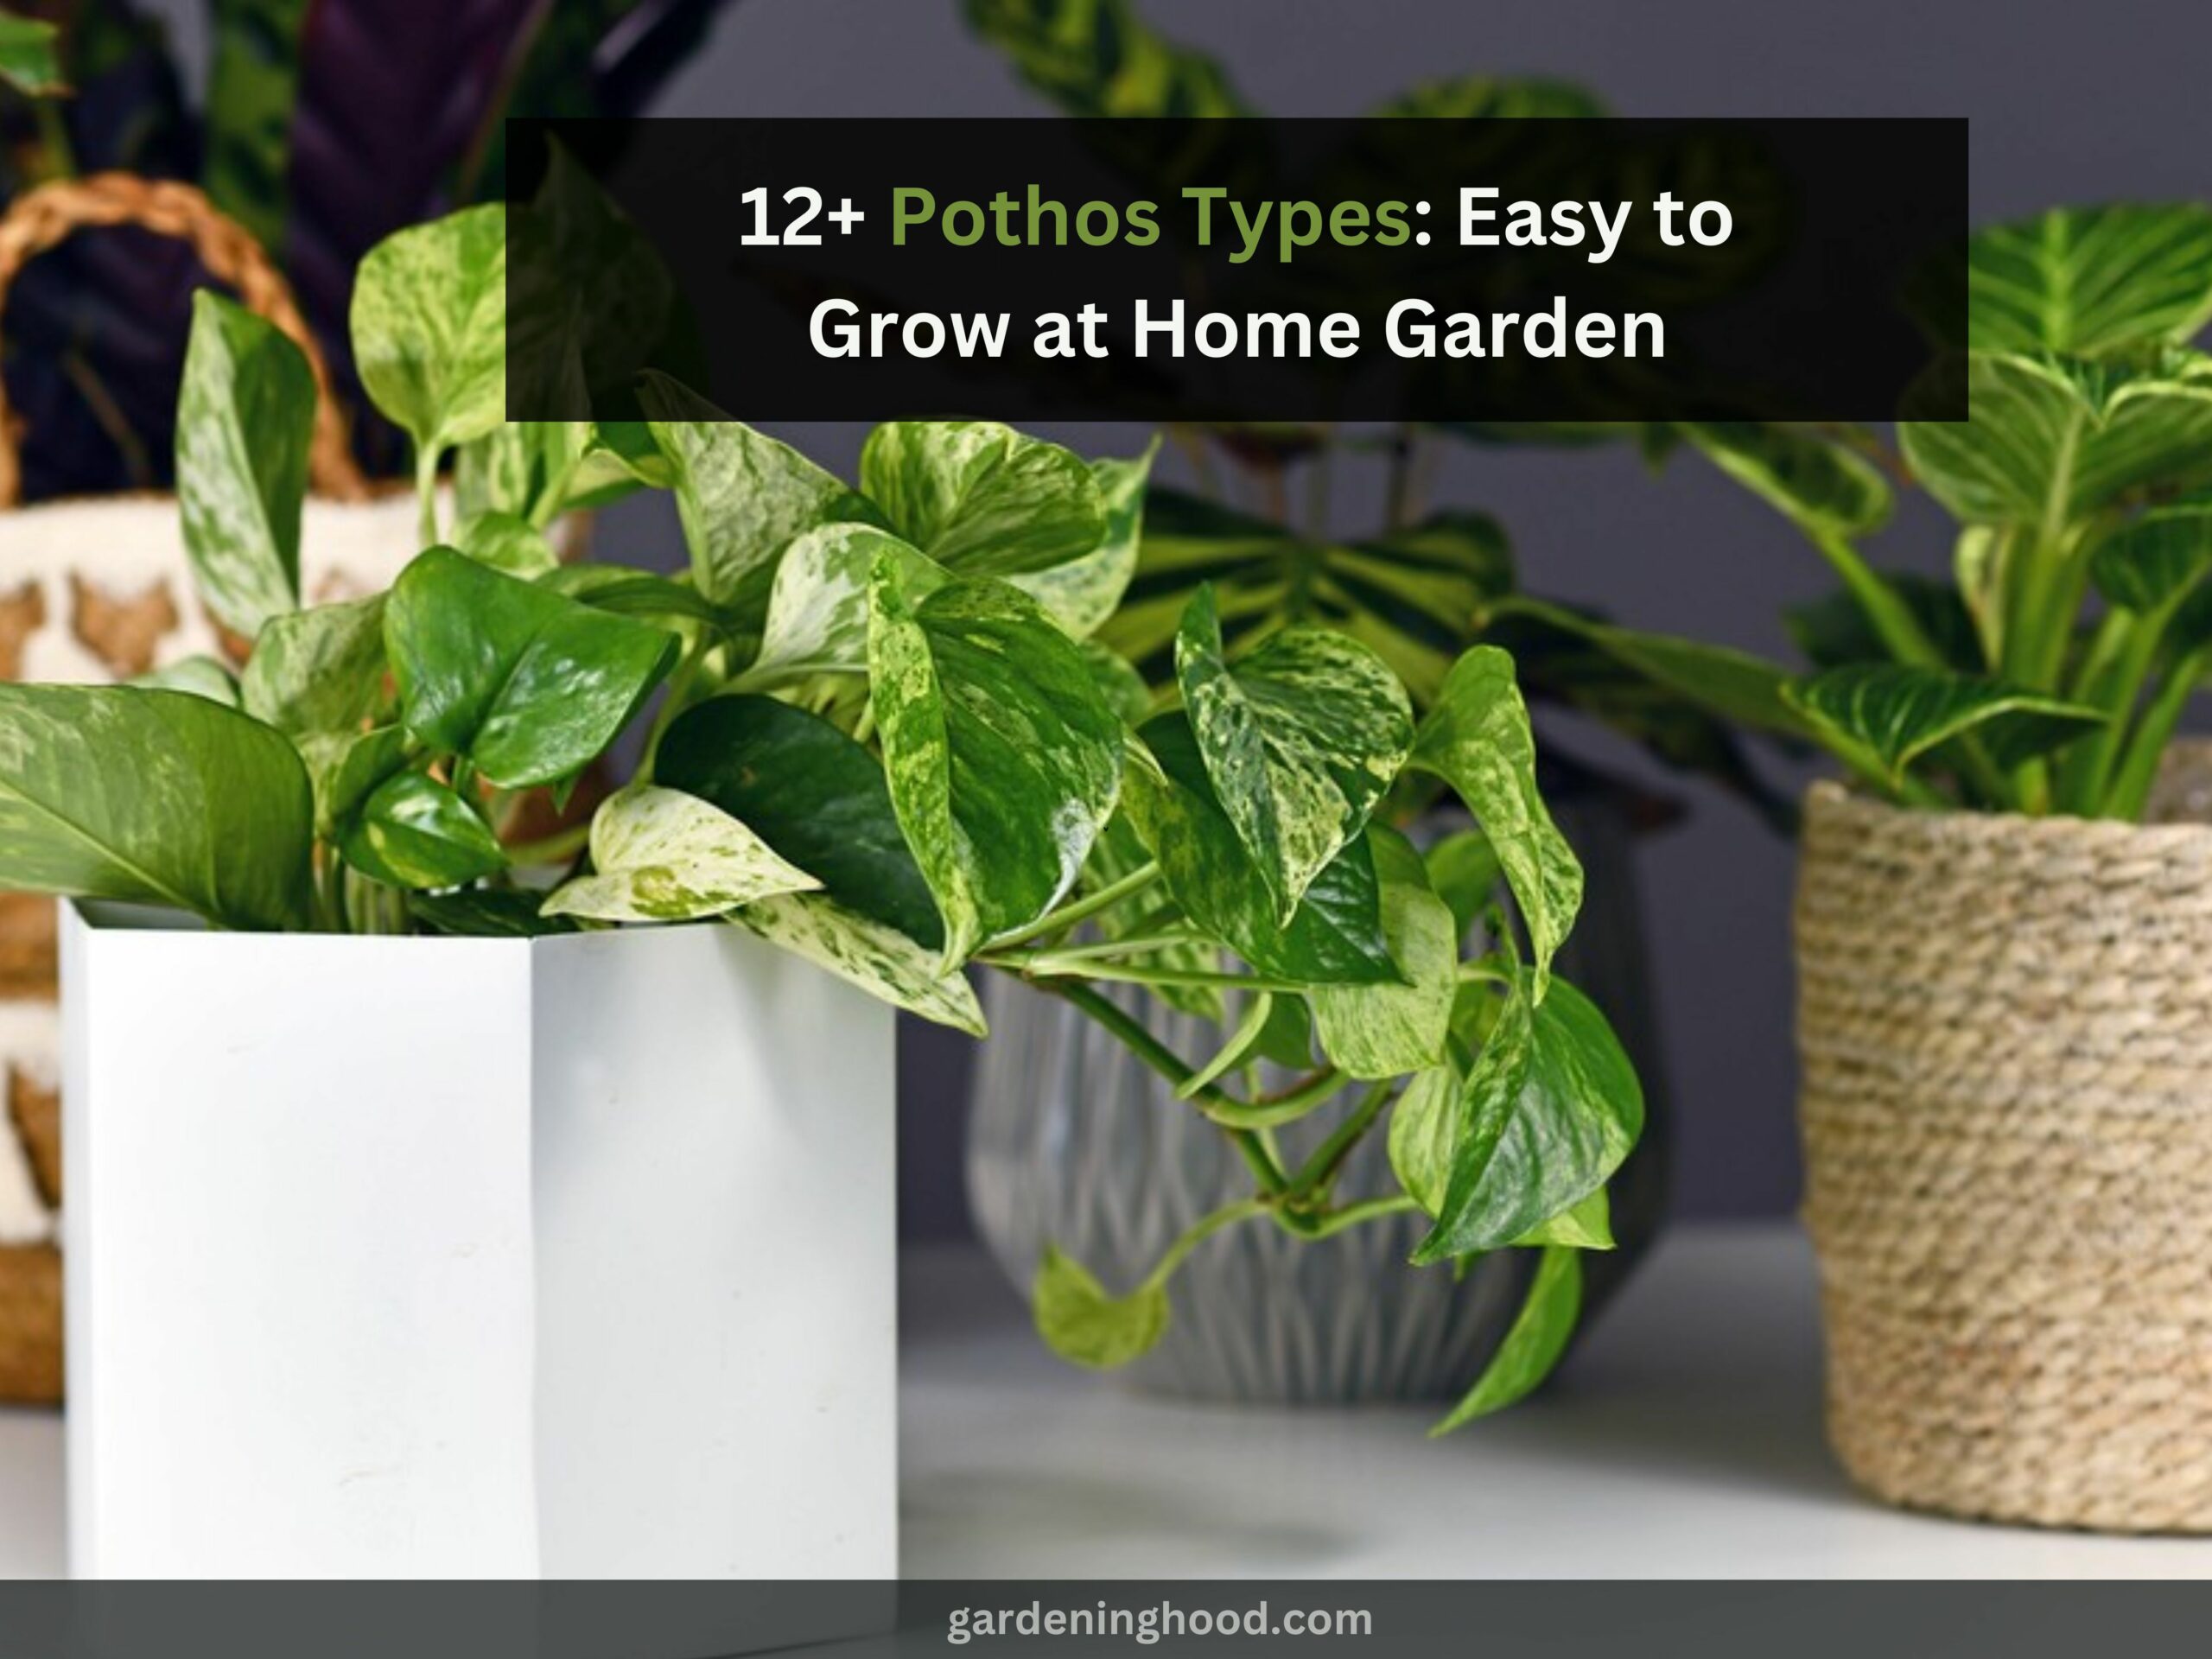 12+ Pothos Types: Easy to Grow at Home Garden